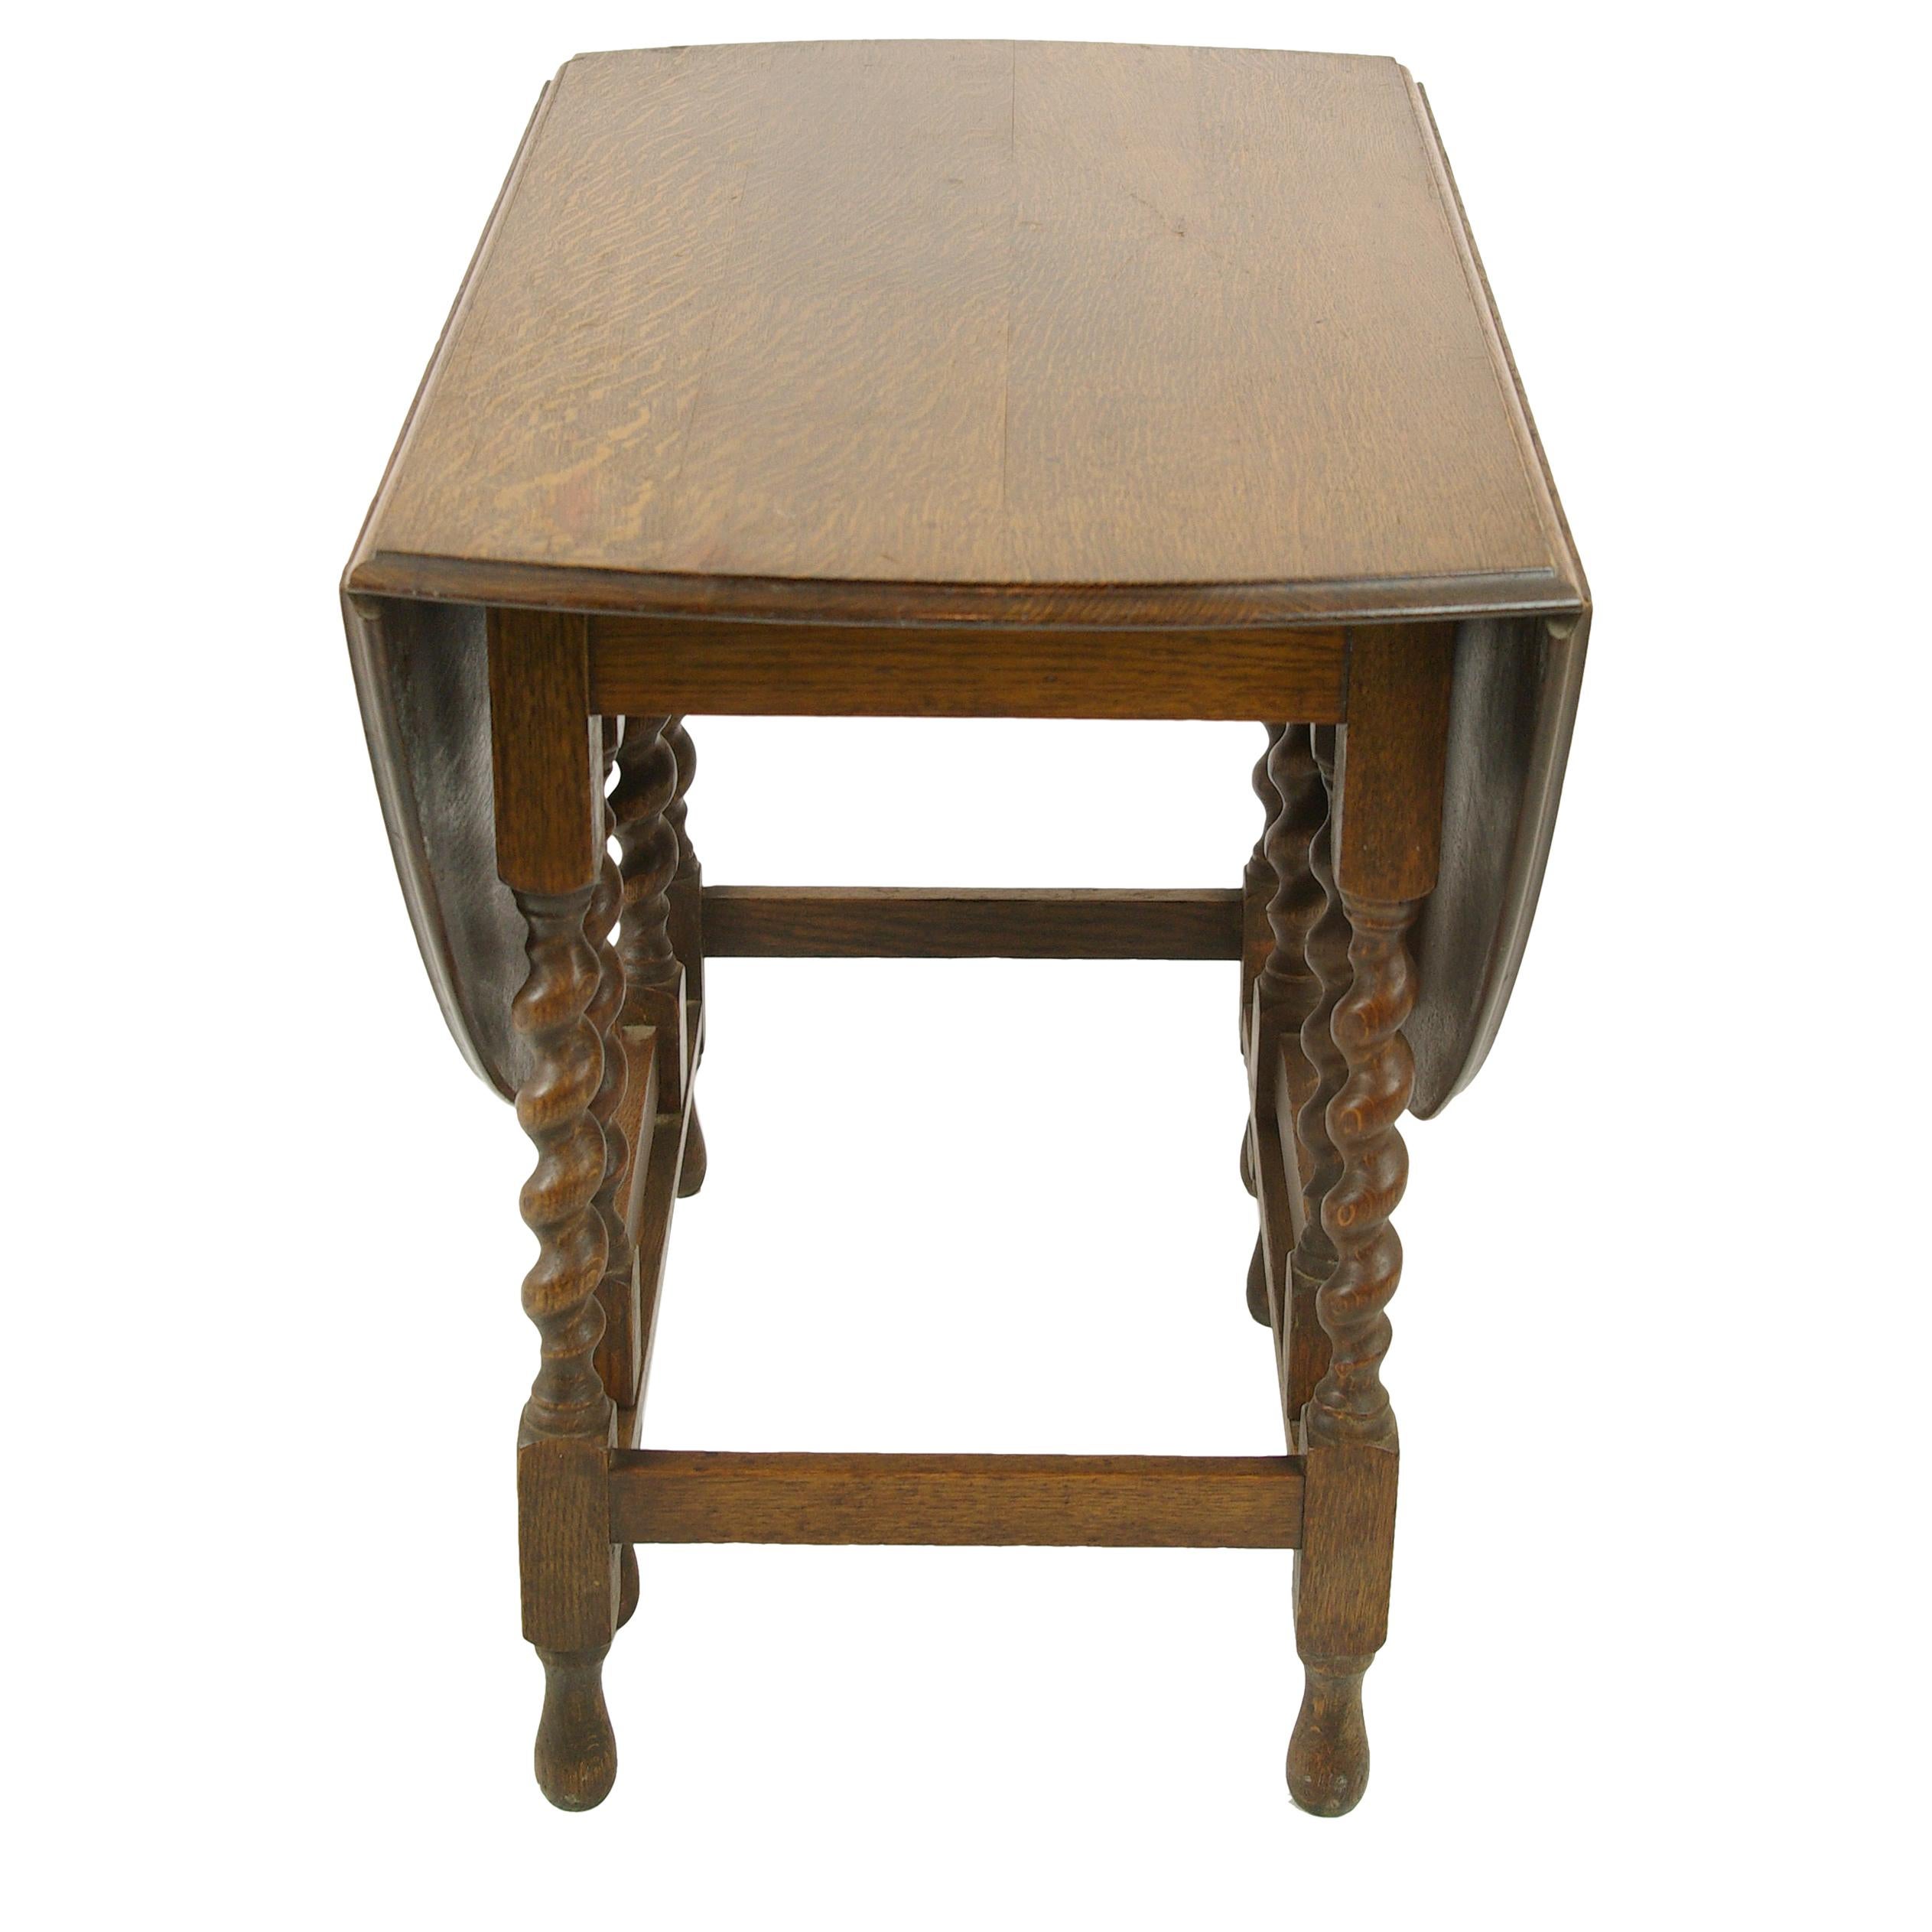 Antique Gateleg Table, Oak Barley Twist Oval Drop-Leaf Table, B1418